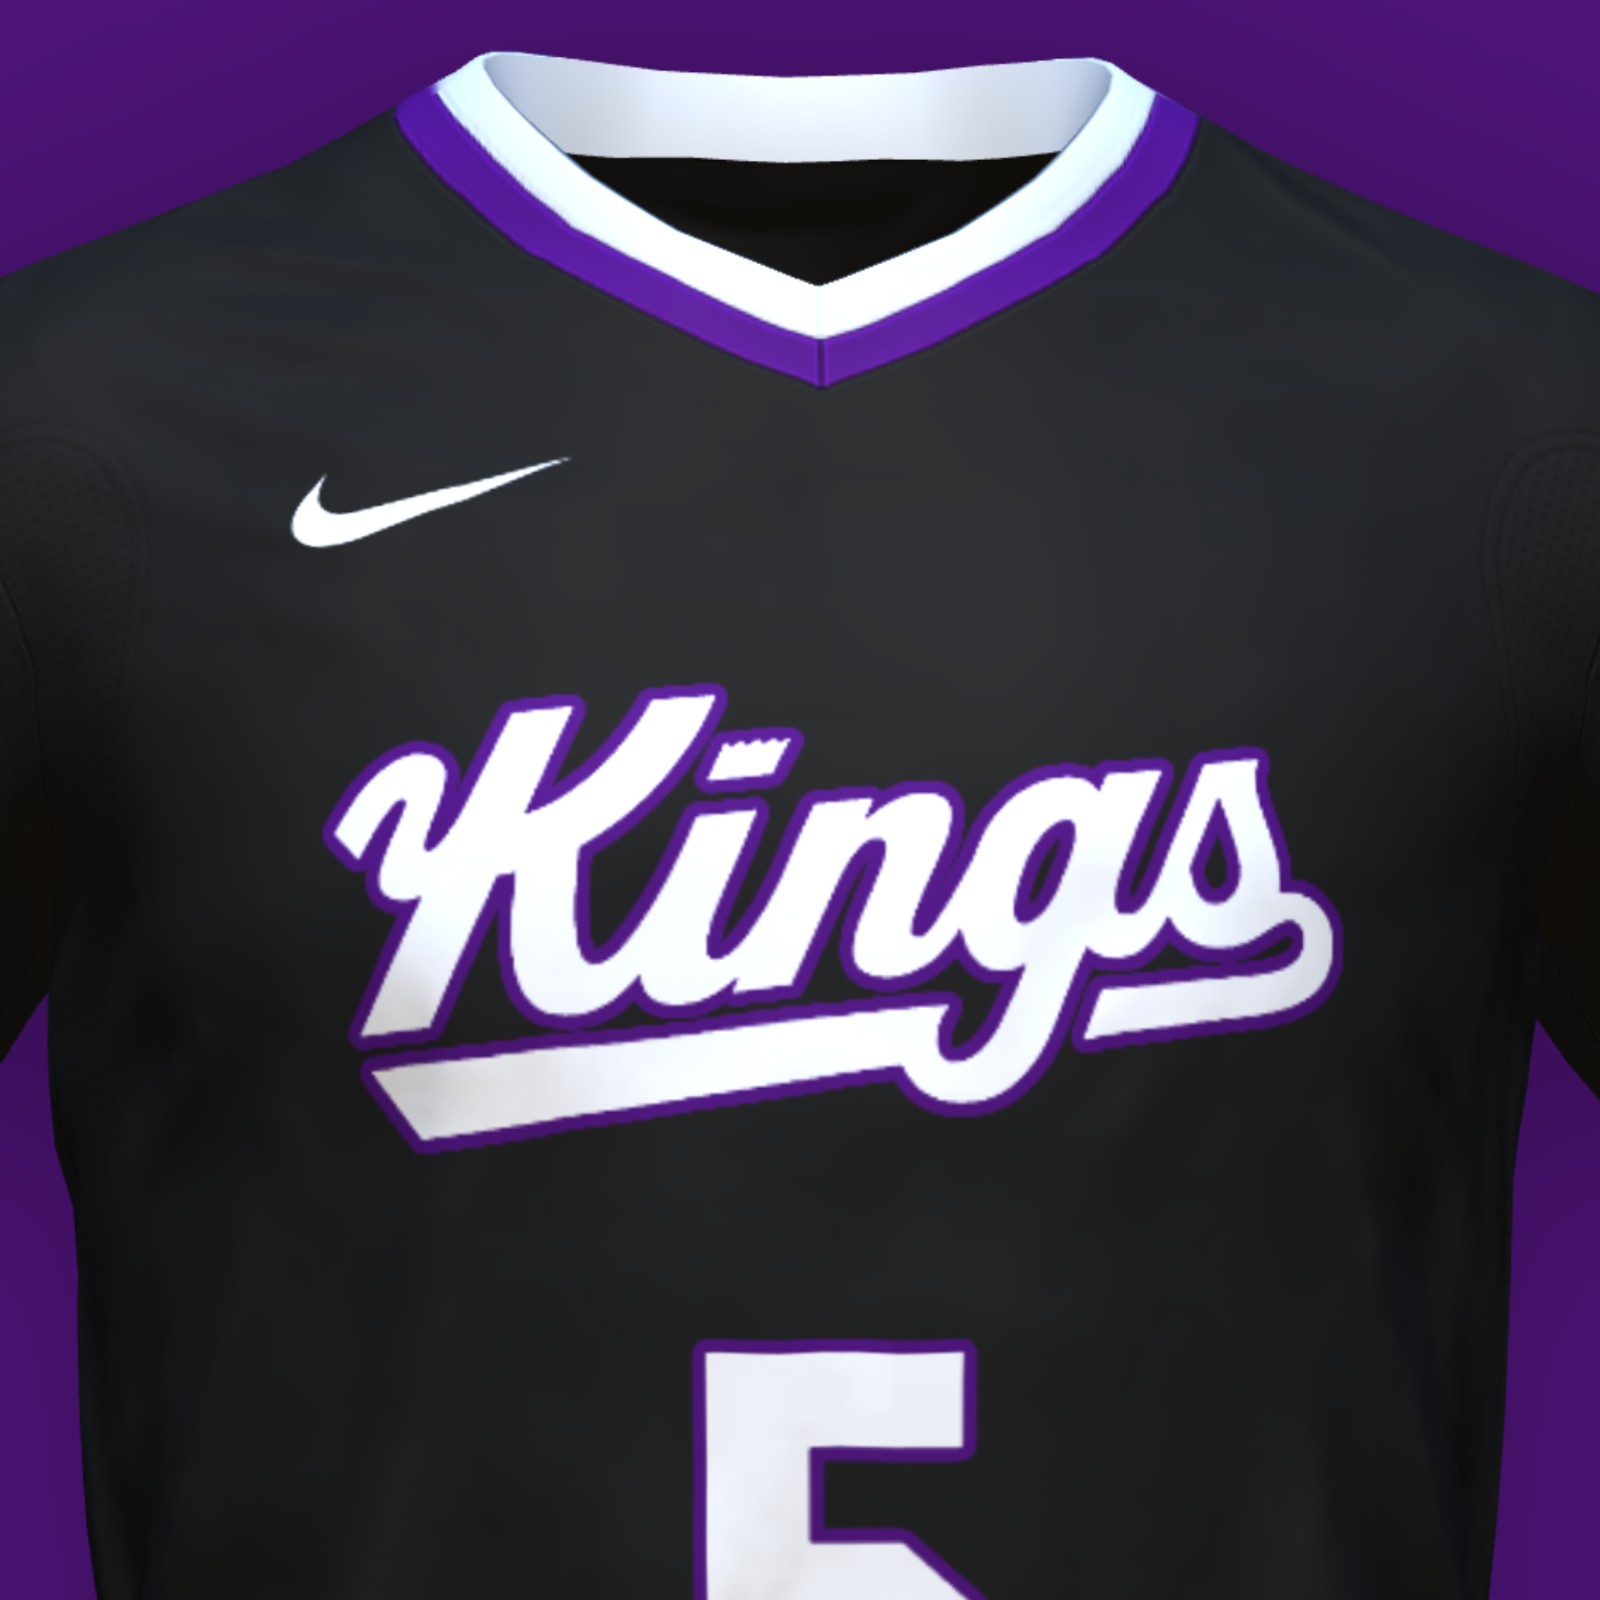 Sacramento Kings uniforms for 2023-24 season are released